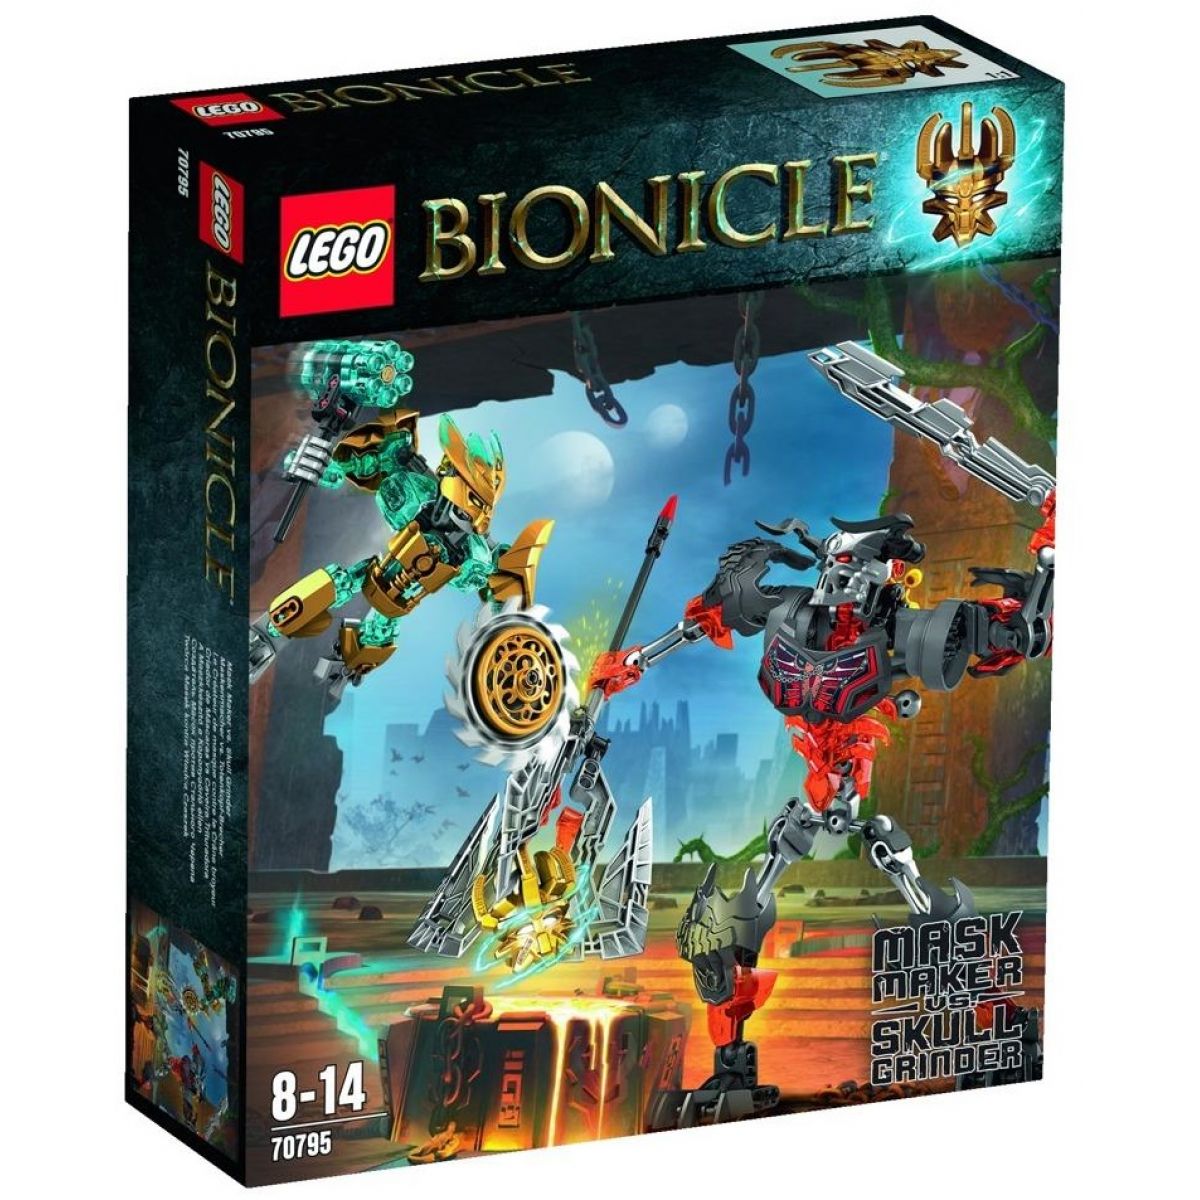 LEGO Bionicle 70795 Vládce Masek vs. Lebkoun Brusič